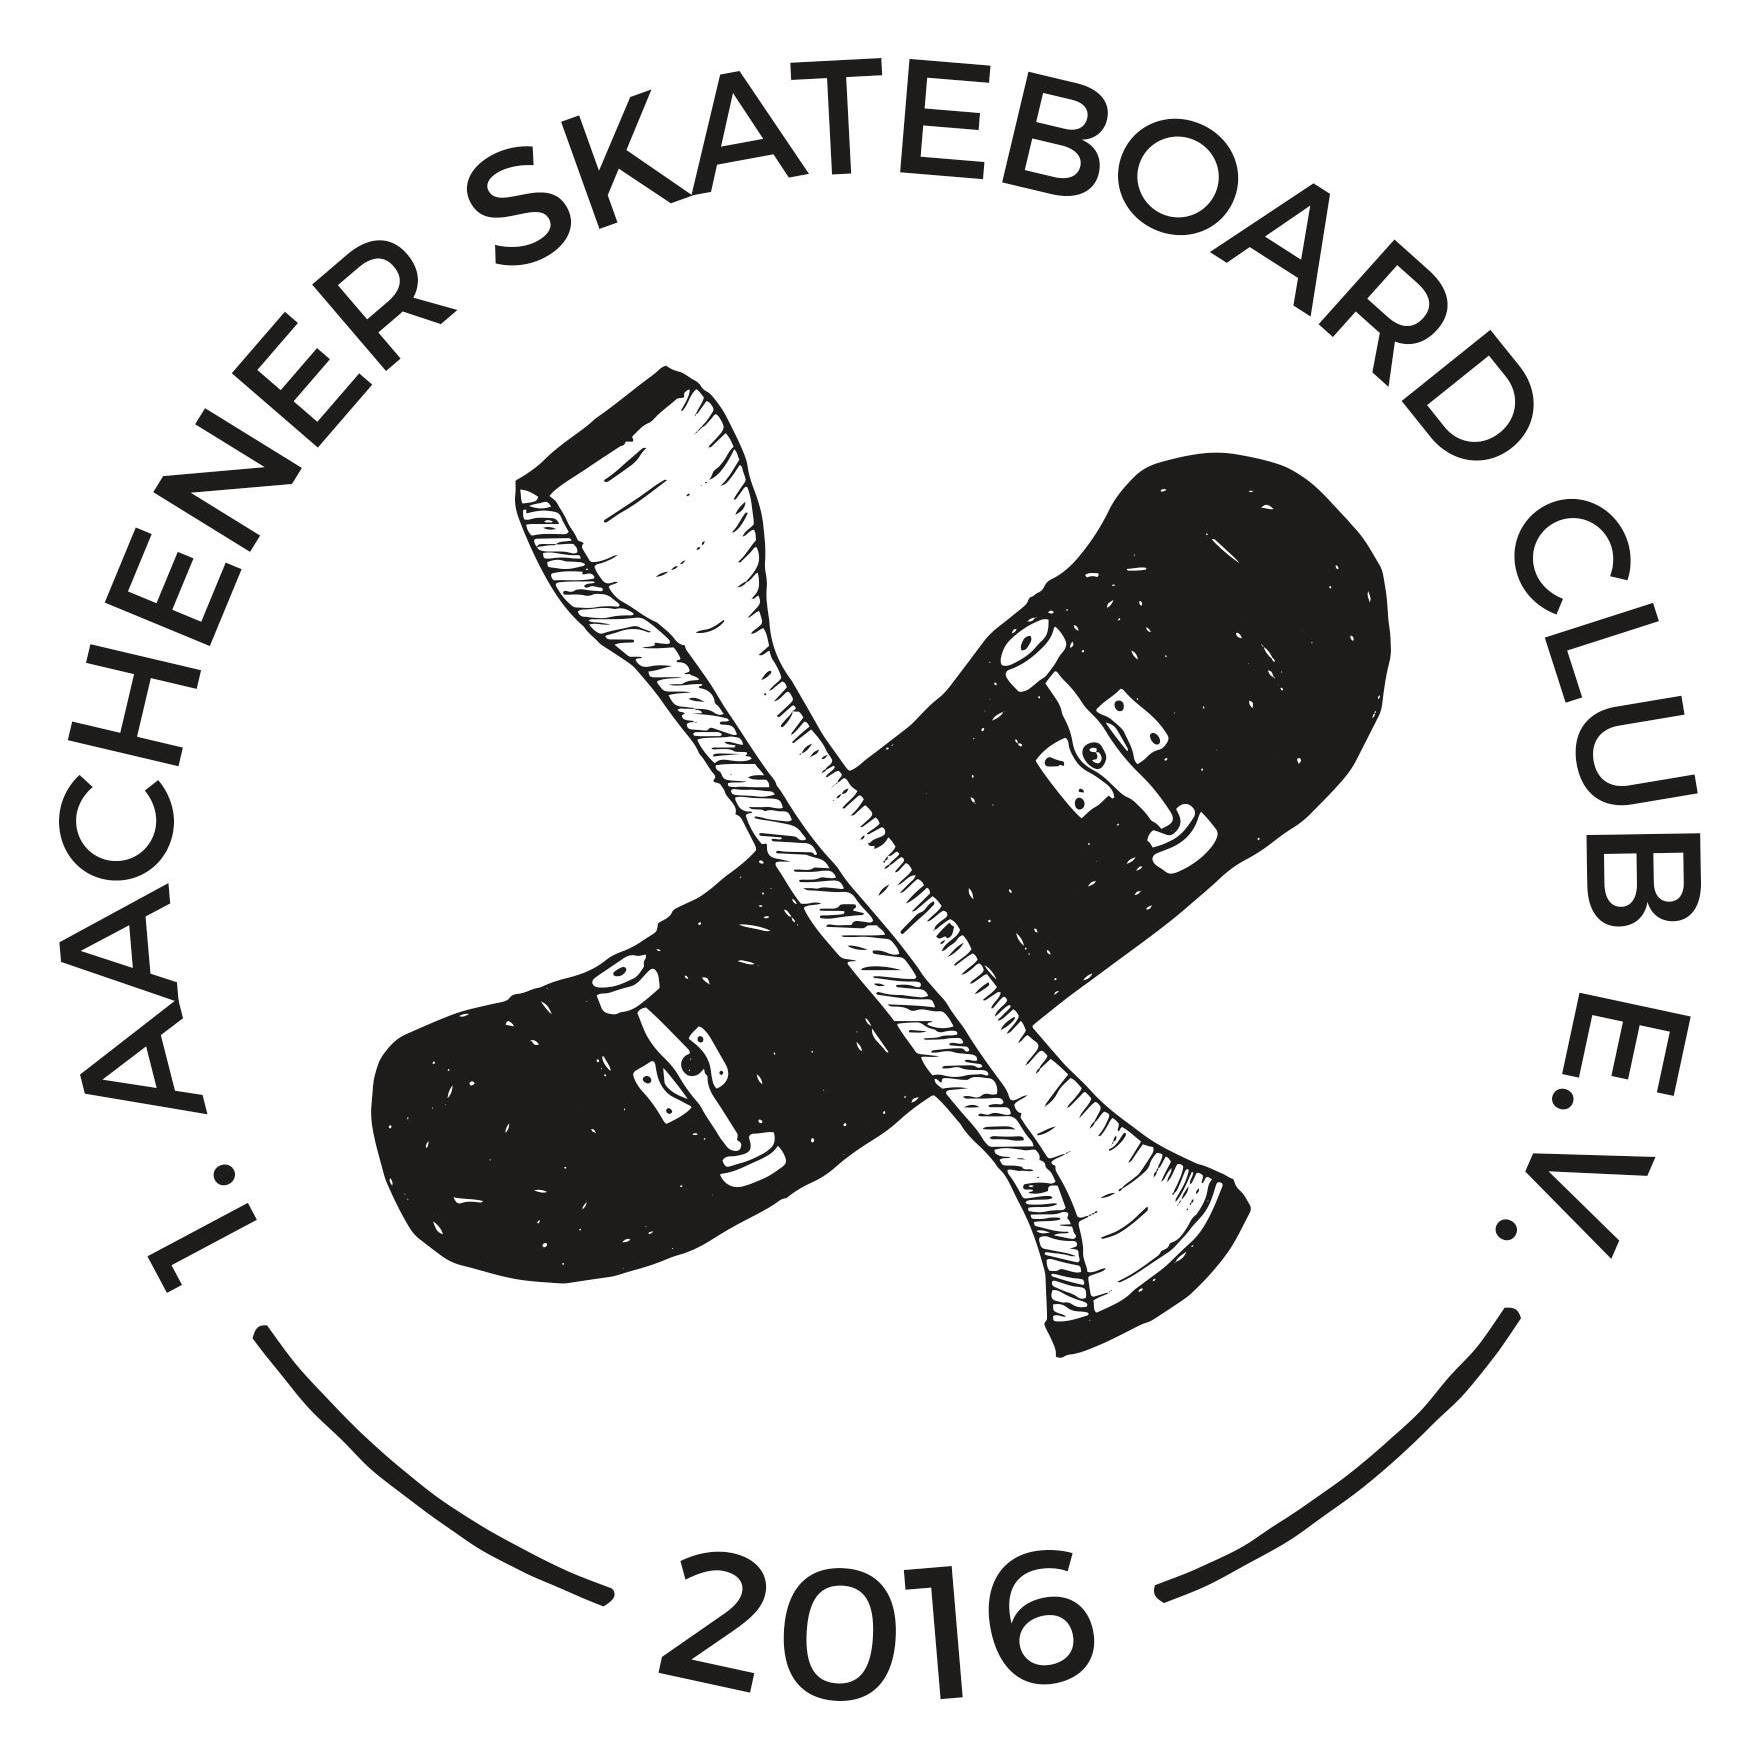 1. Aachener Skateboard Club e.V.